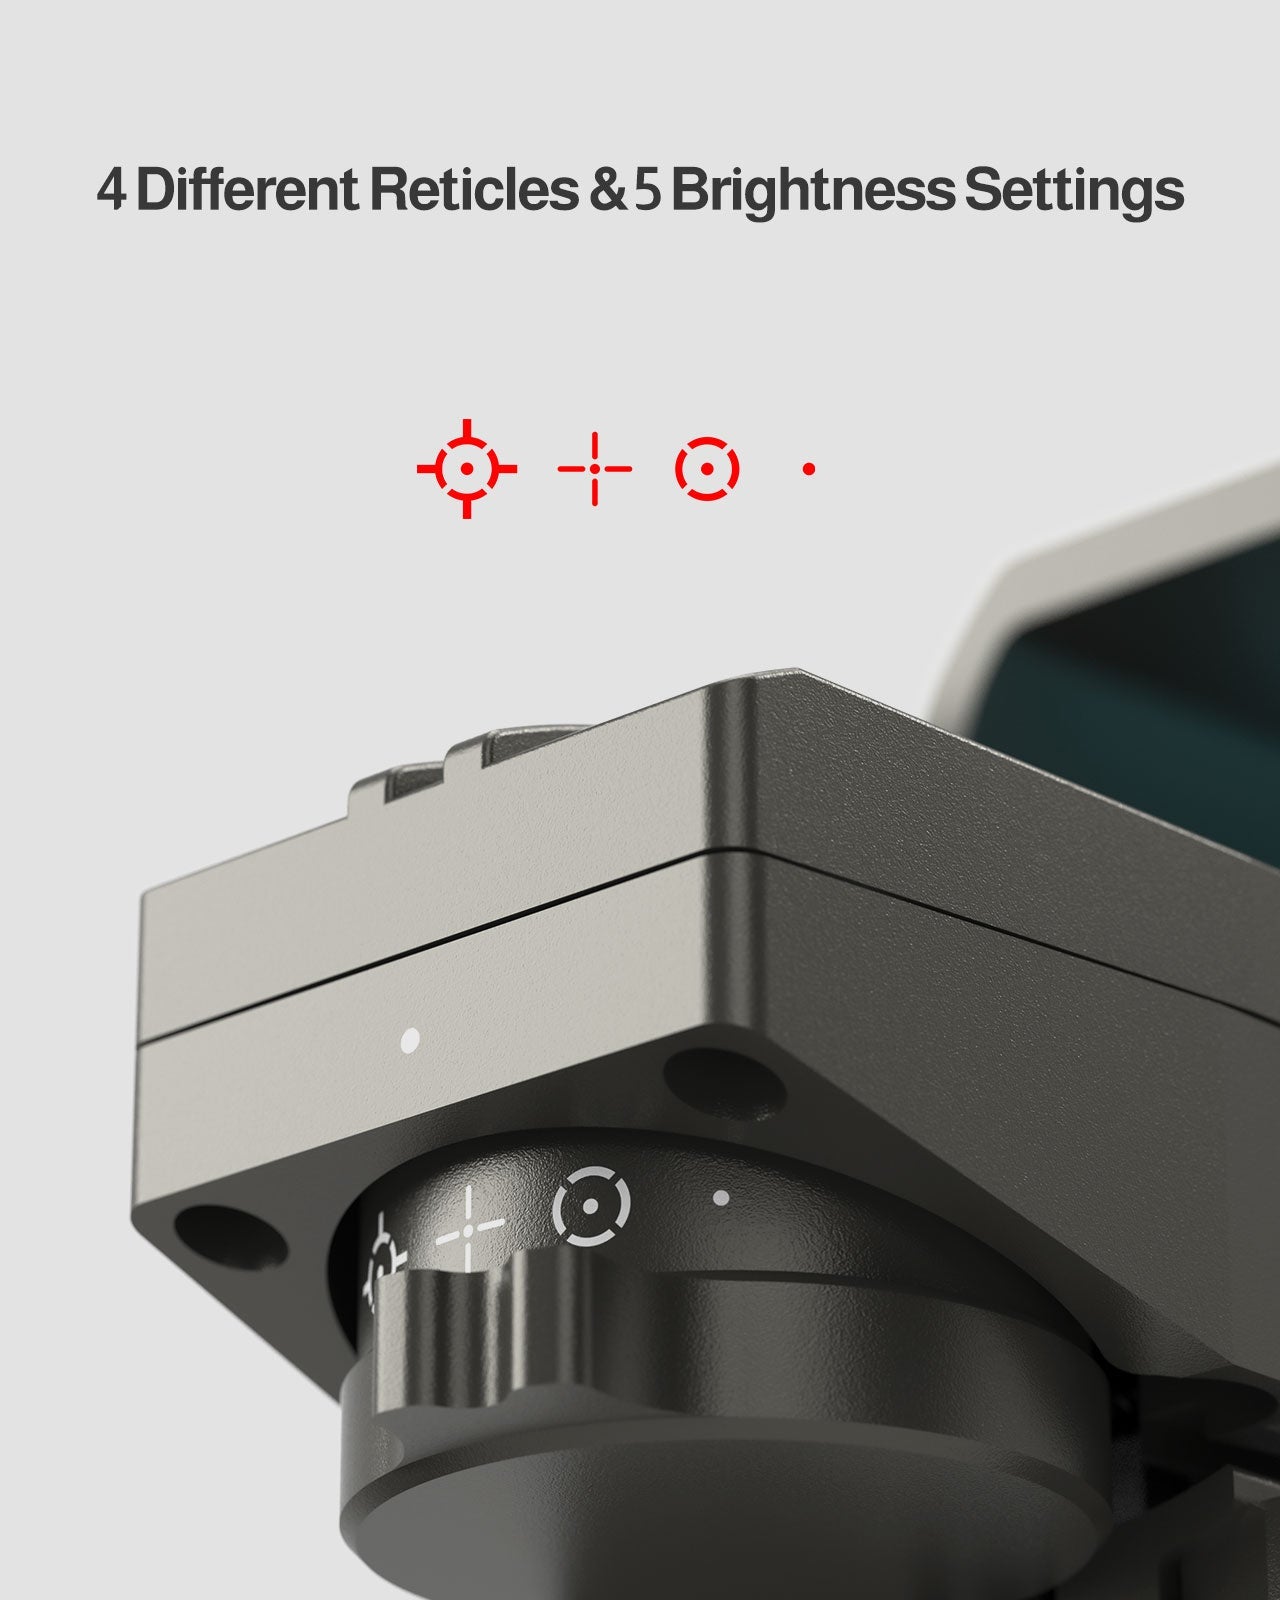 Feyachi RS60 Red Dot Reflex Sight Nickel - Multiple Reticle